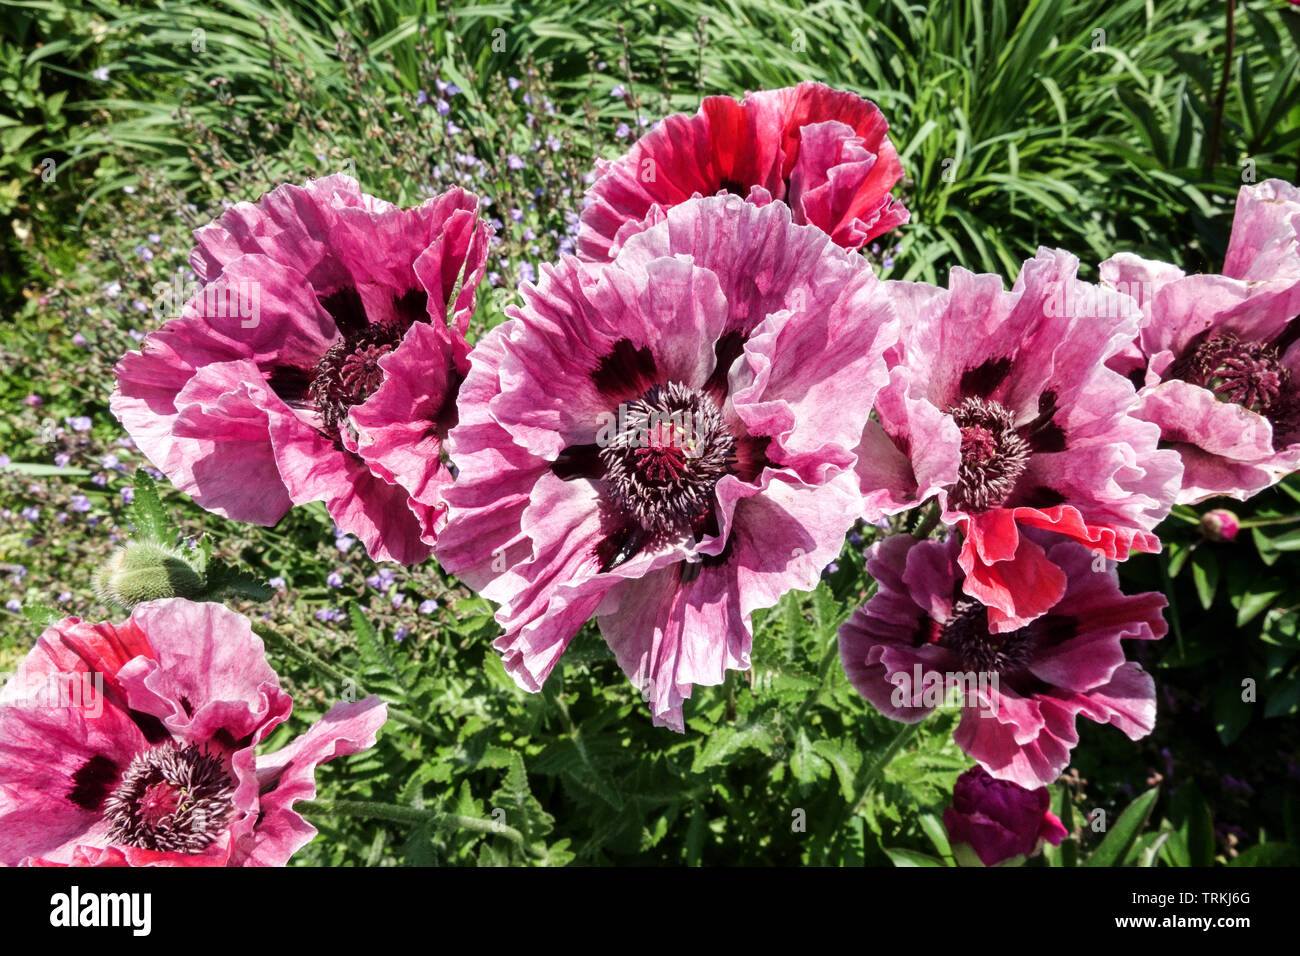 Beautiful garden flowers, Poppy 'Patty's Plum' Purple flowers in garden Stock Photo